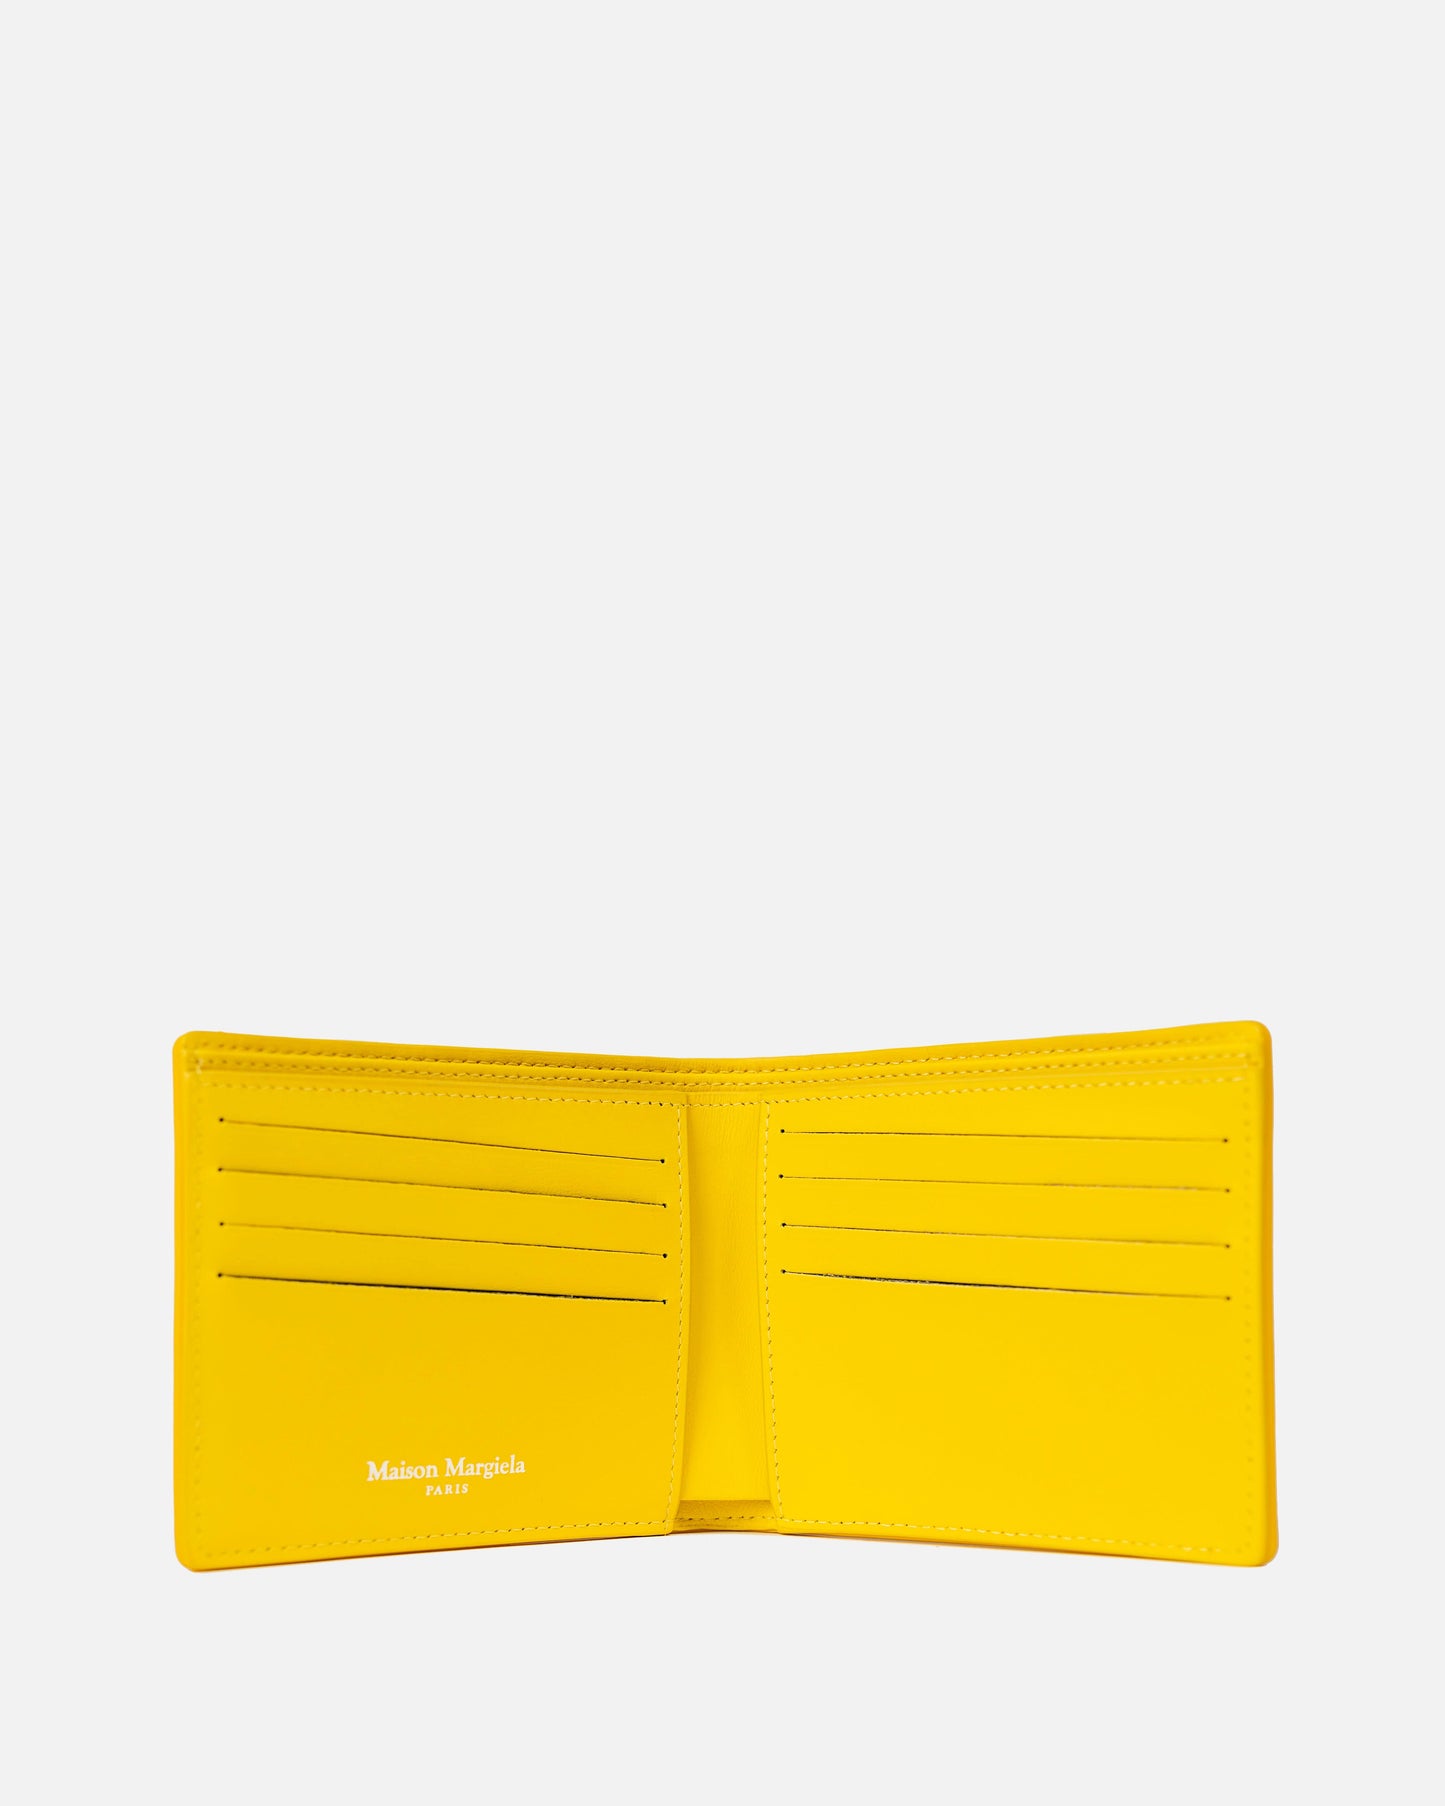 Maison Margiela Leather Goods Rubberized Bifold Wallet in Yellow